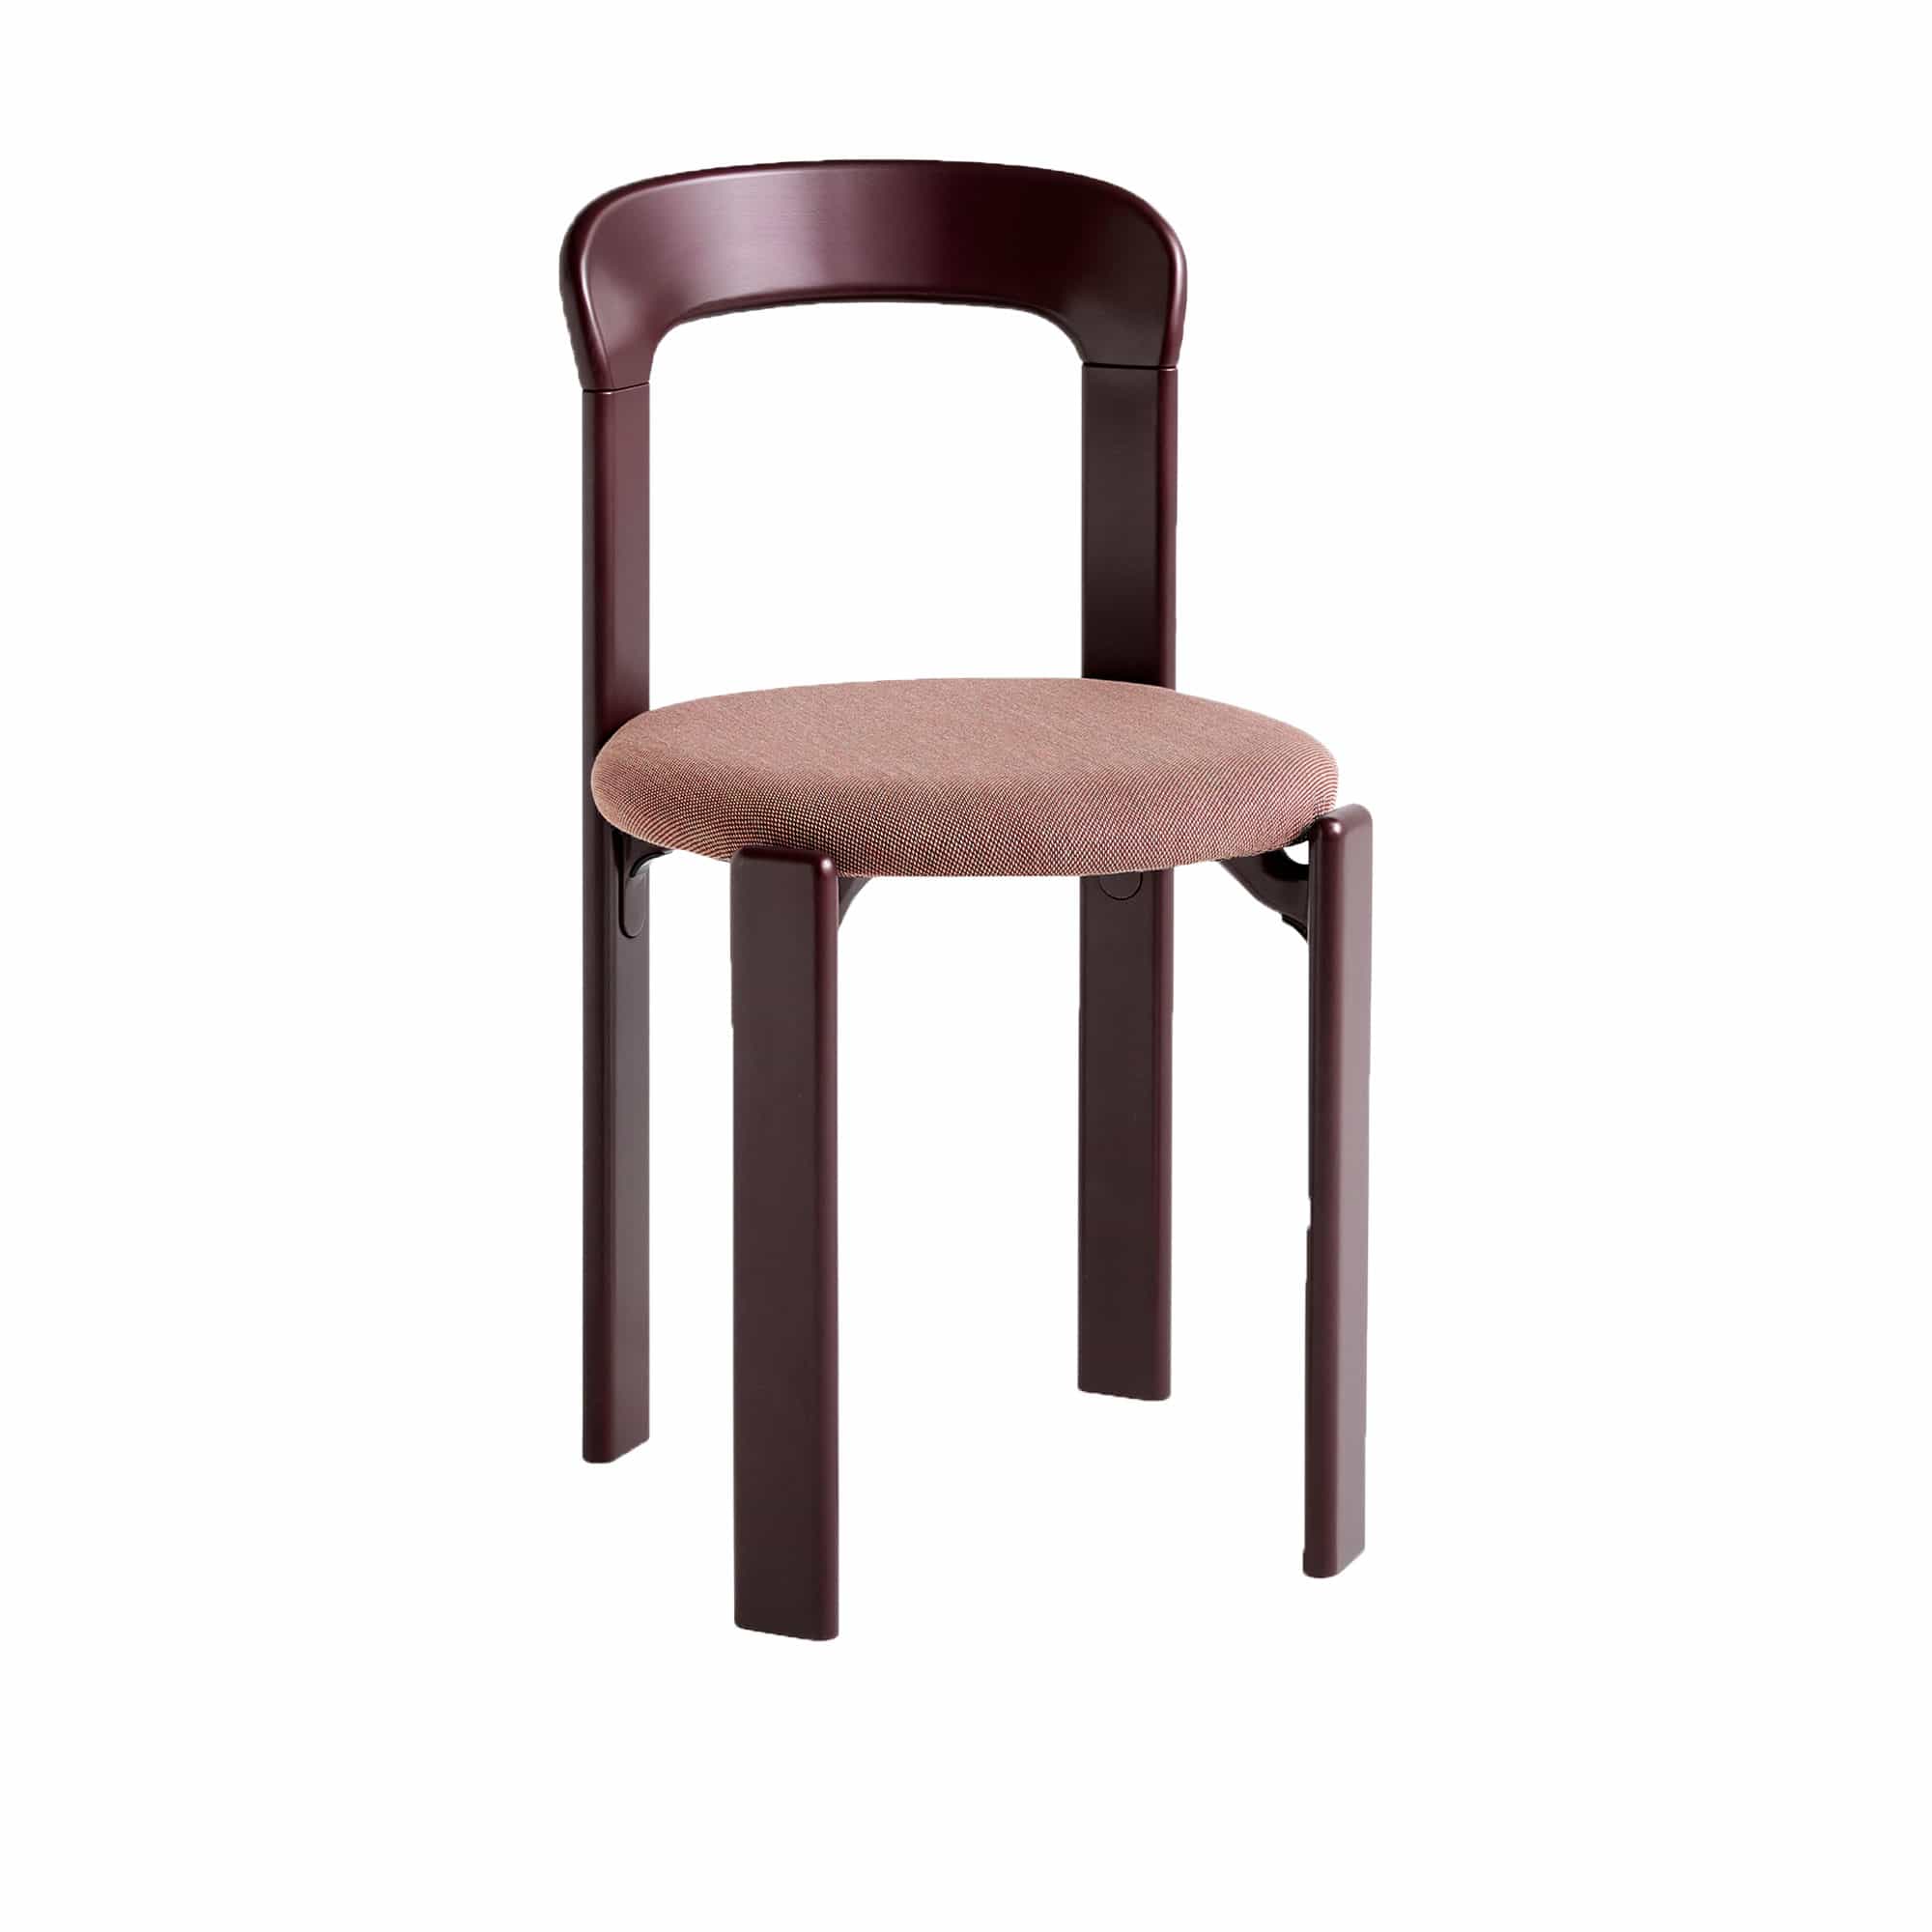 Rey Chair - Klädd sits